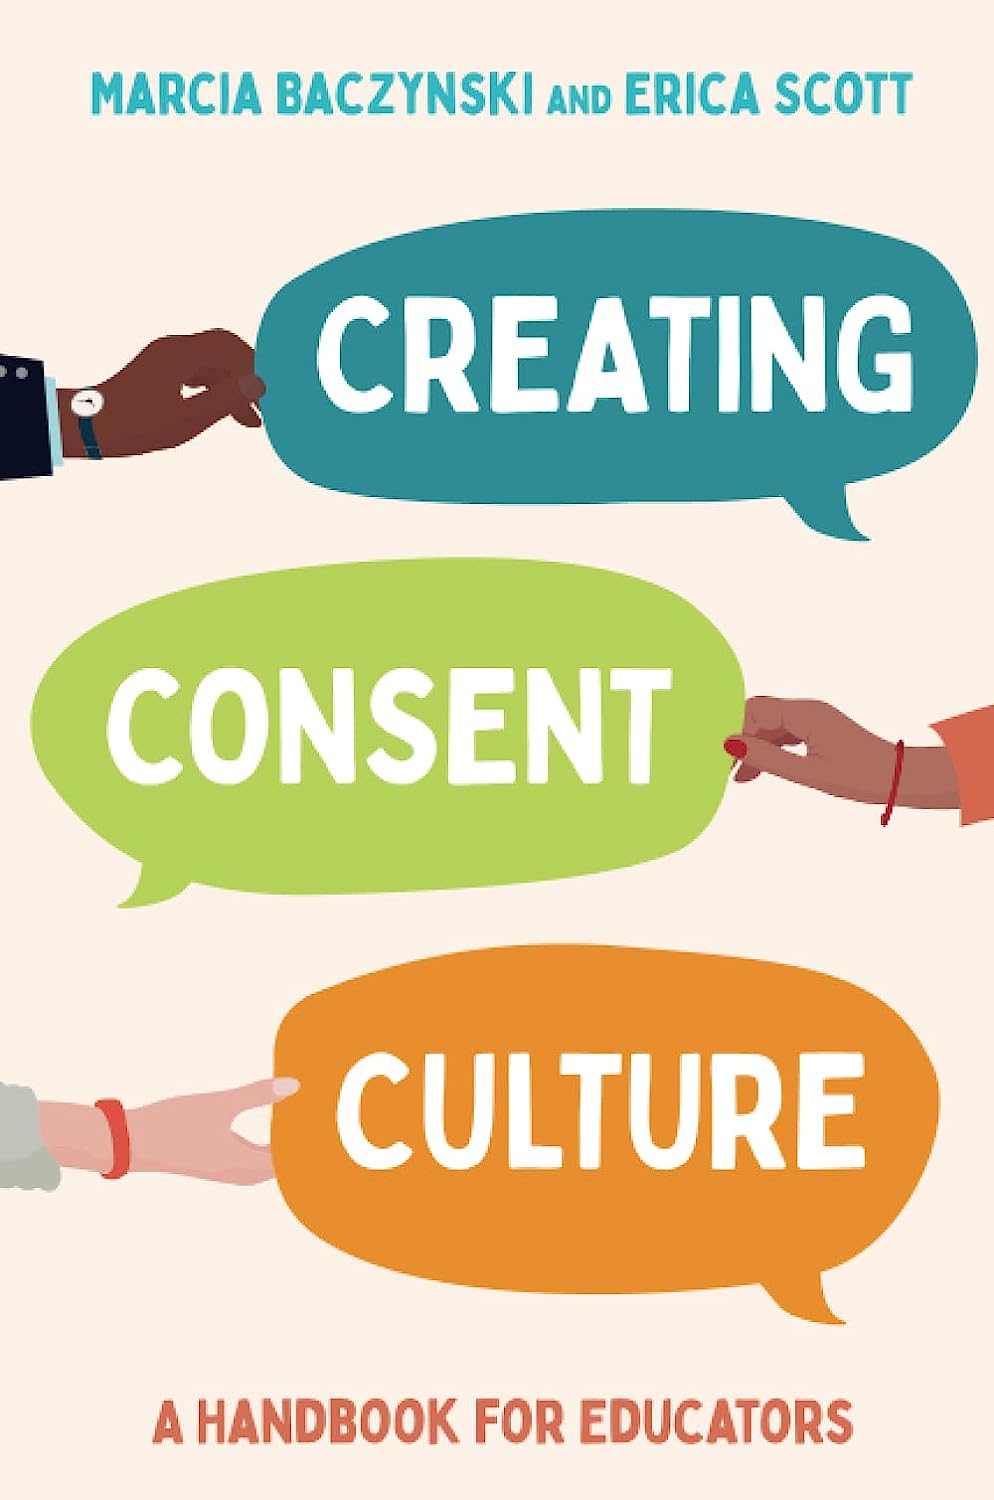 Creating Consent Culture: A Handbook For Educators [Marcia Baczynski & Erica Scott]